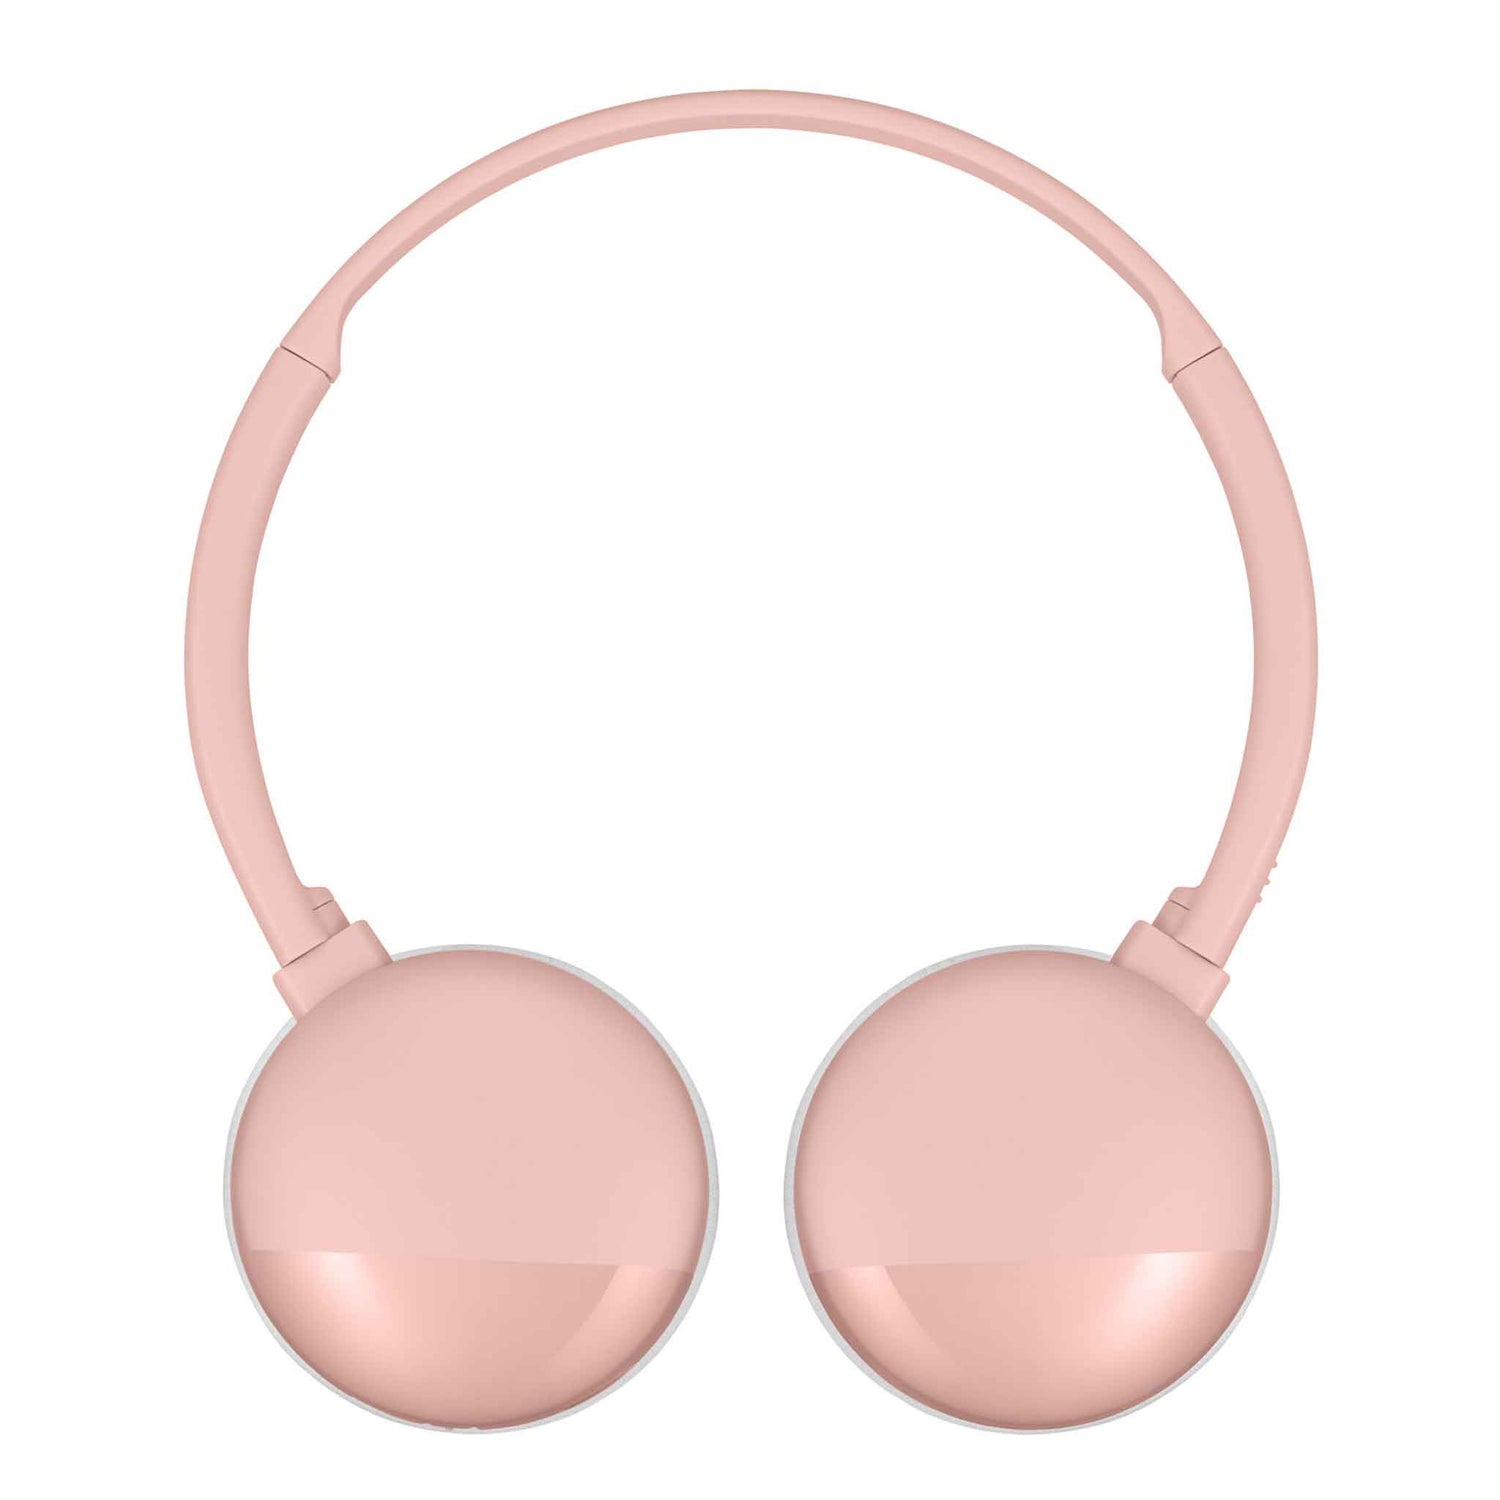 JVC HA-S22W in Pink Bluetooth Headphones lay flat